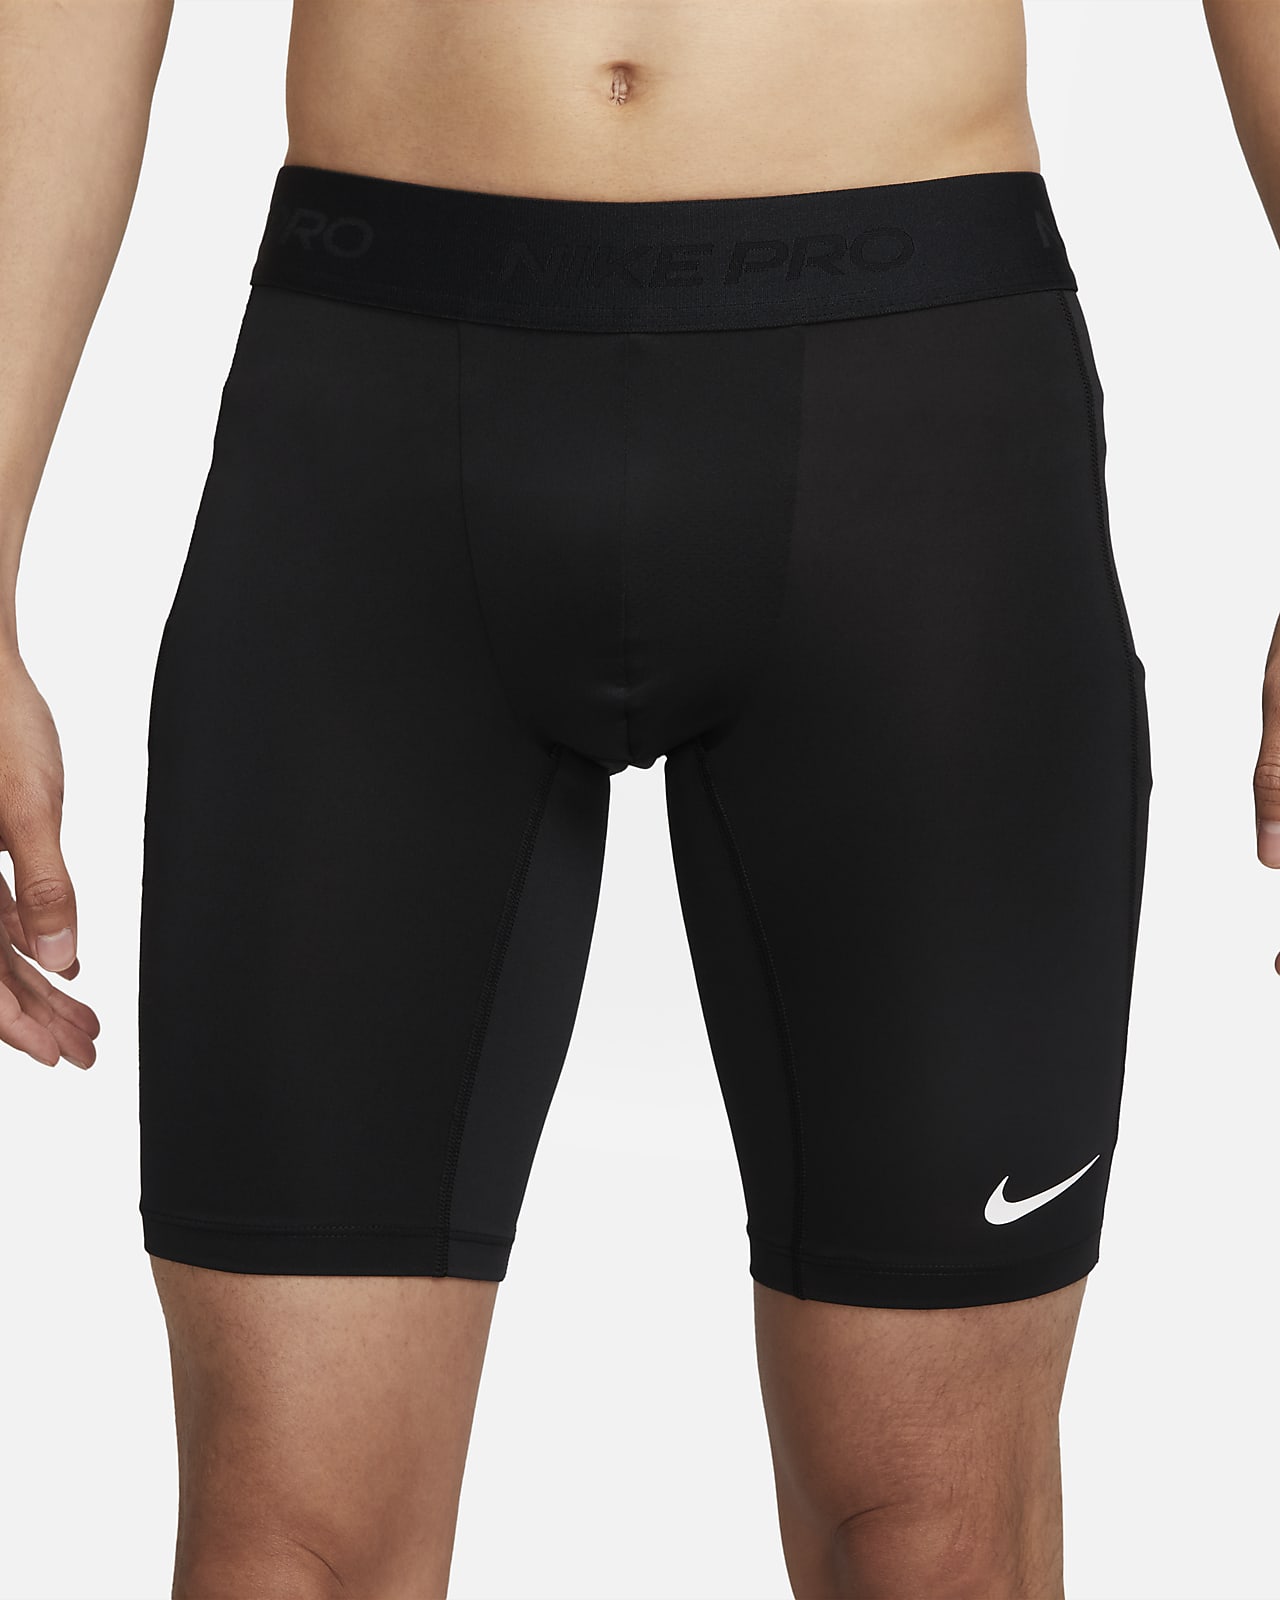 Nike Men's Pro Training Compression Shorts - Black